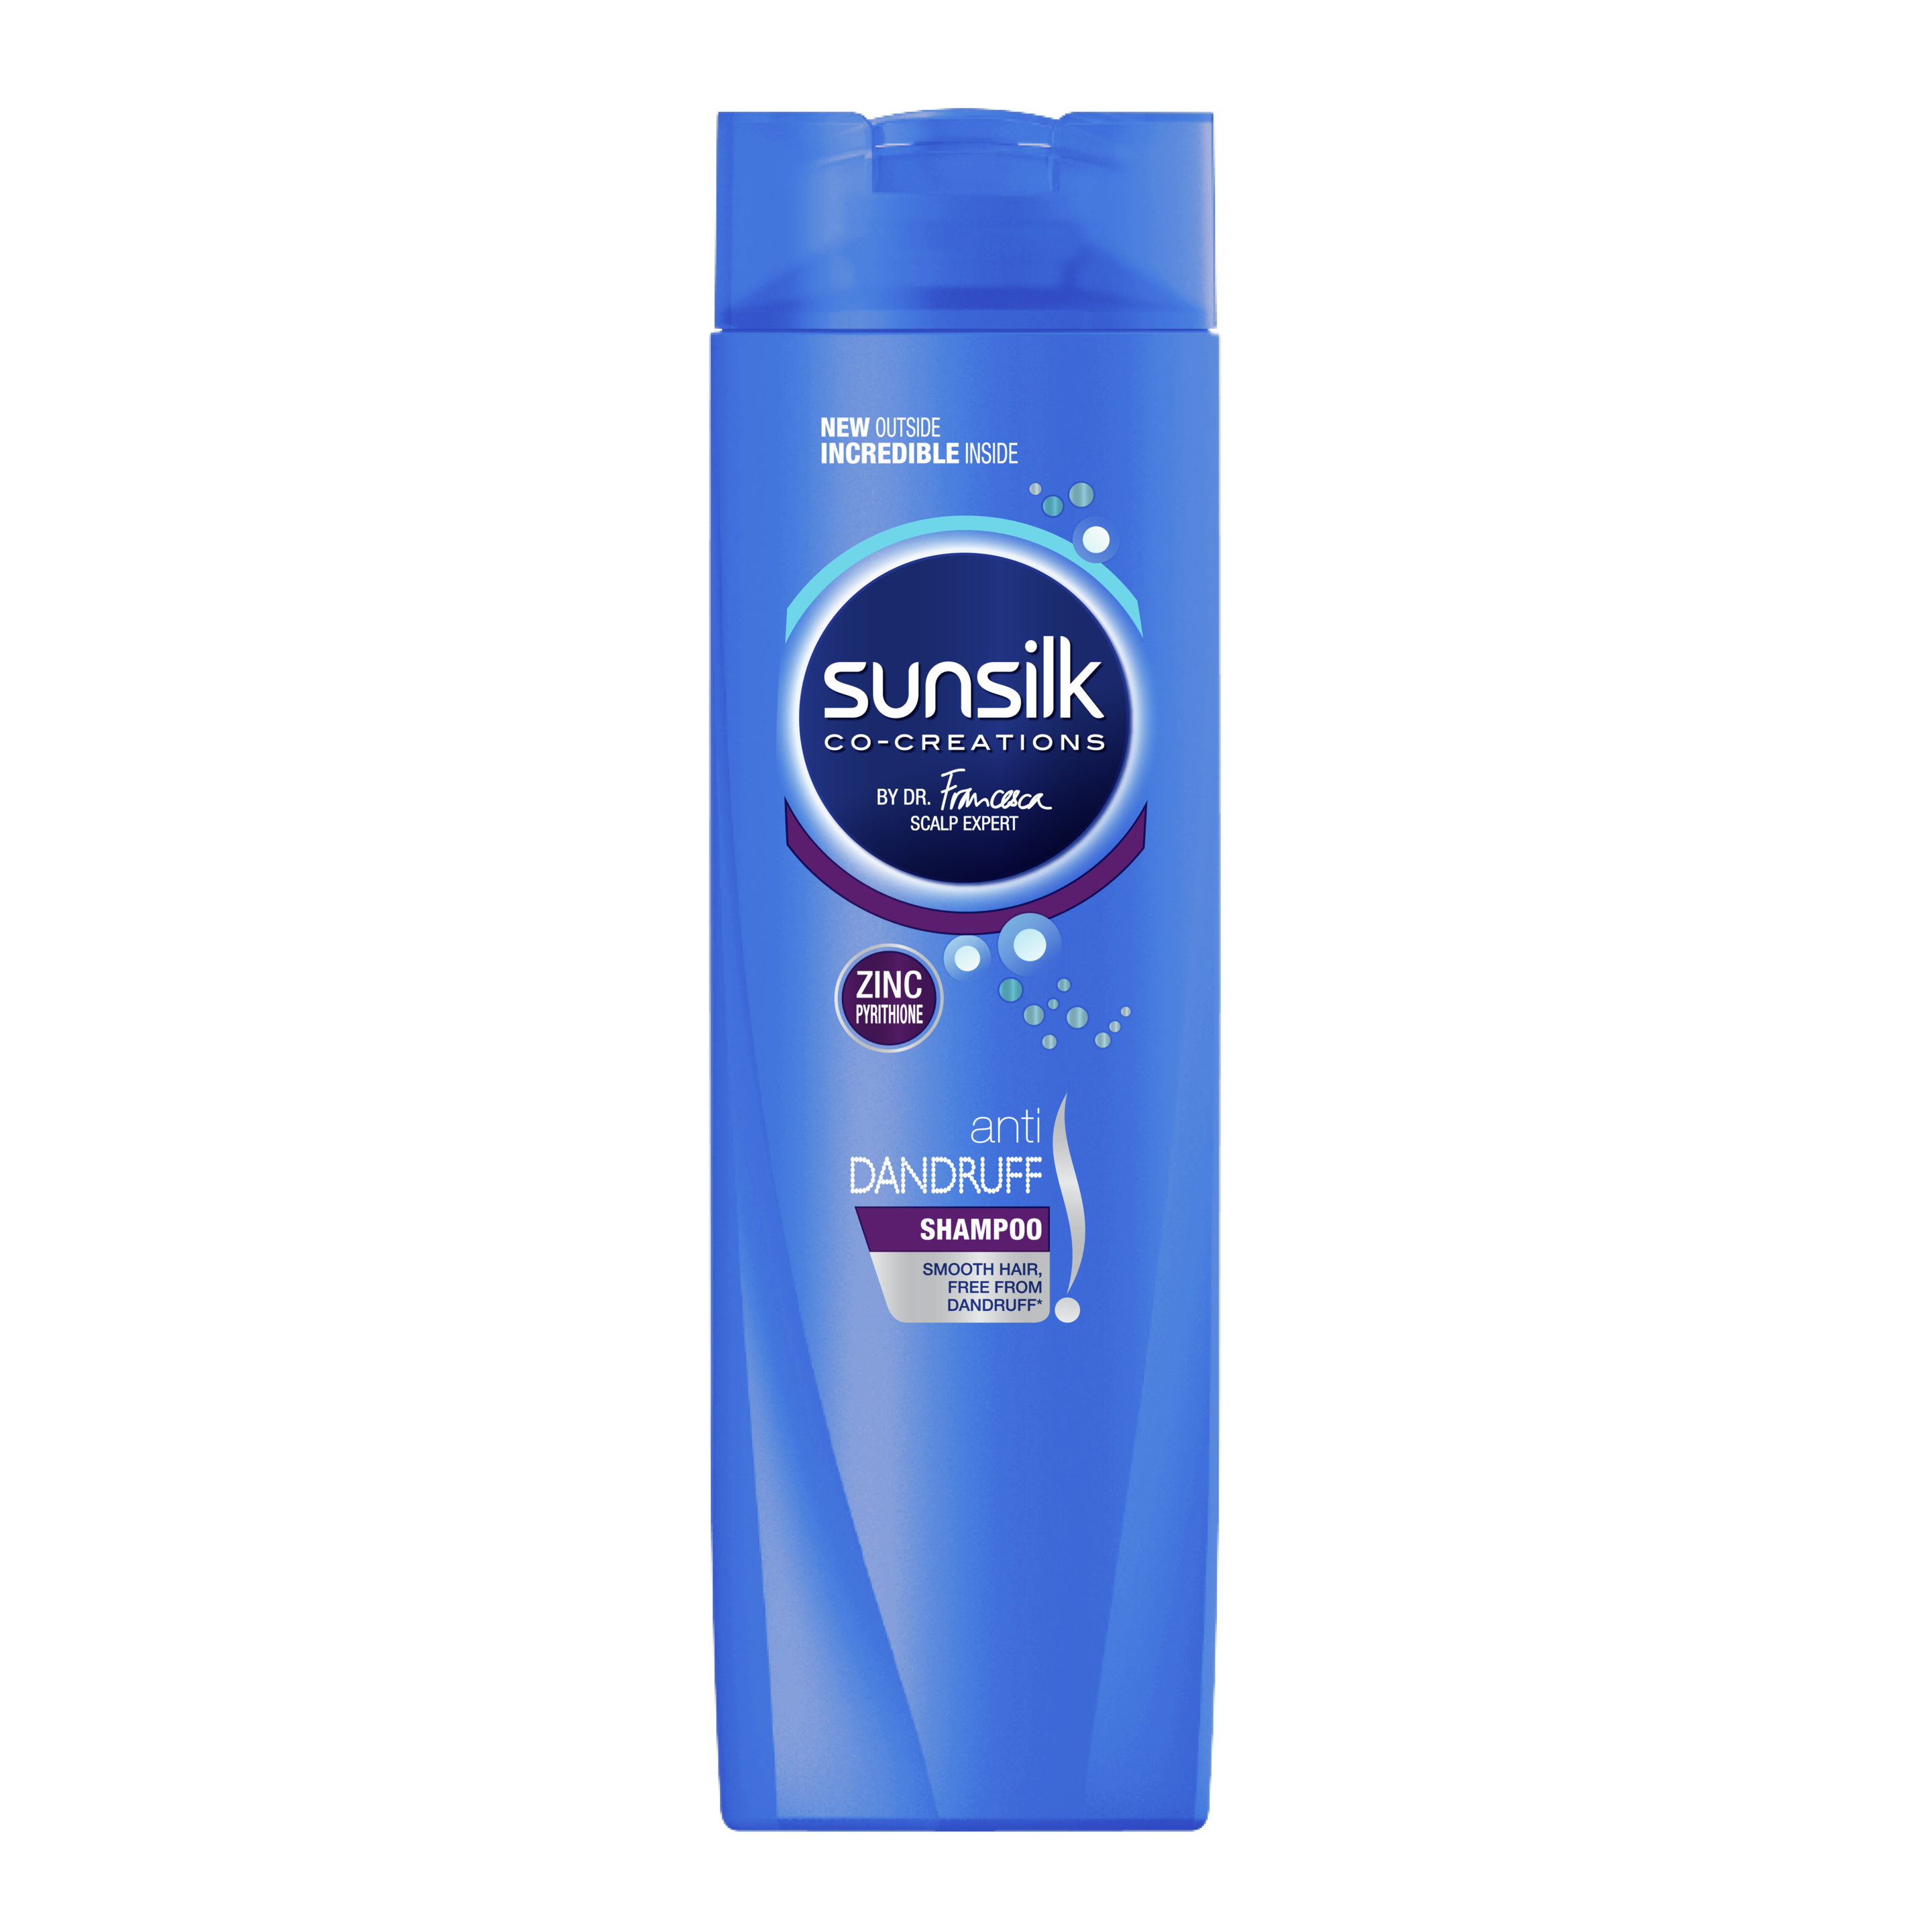 Sunsilk Anti-Dandruff Shampoo 160ml front of pack image